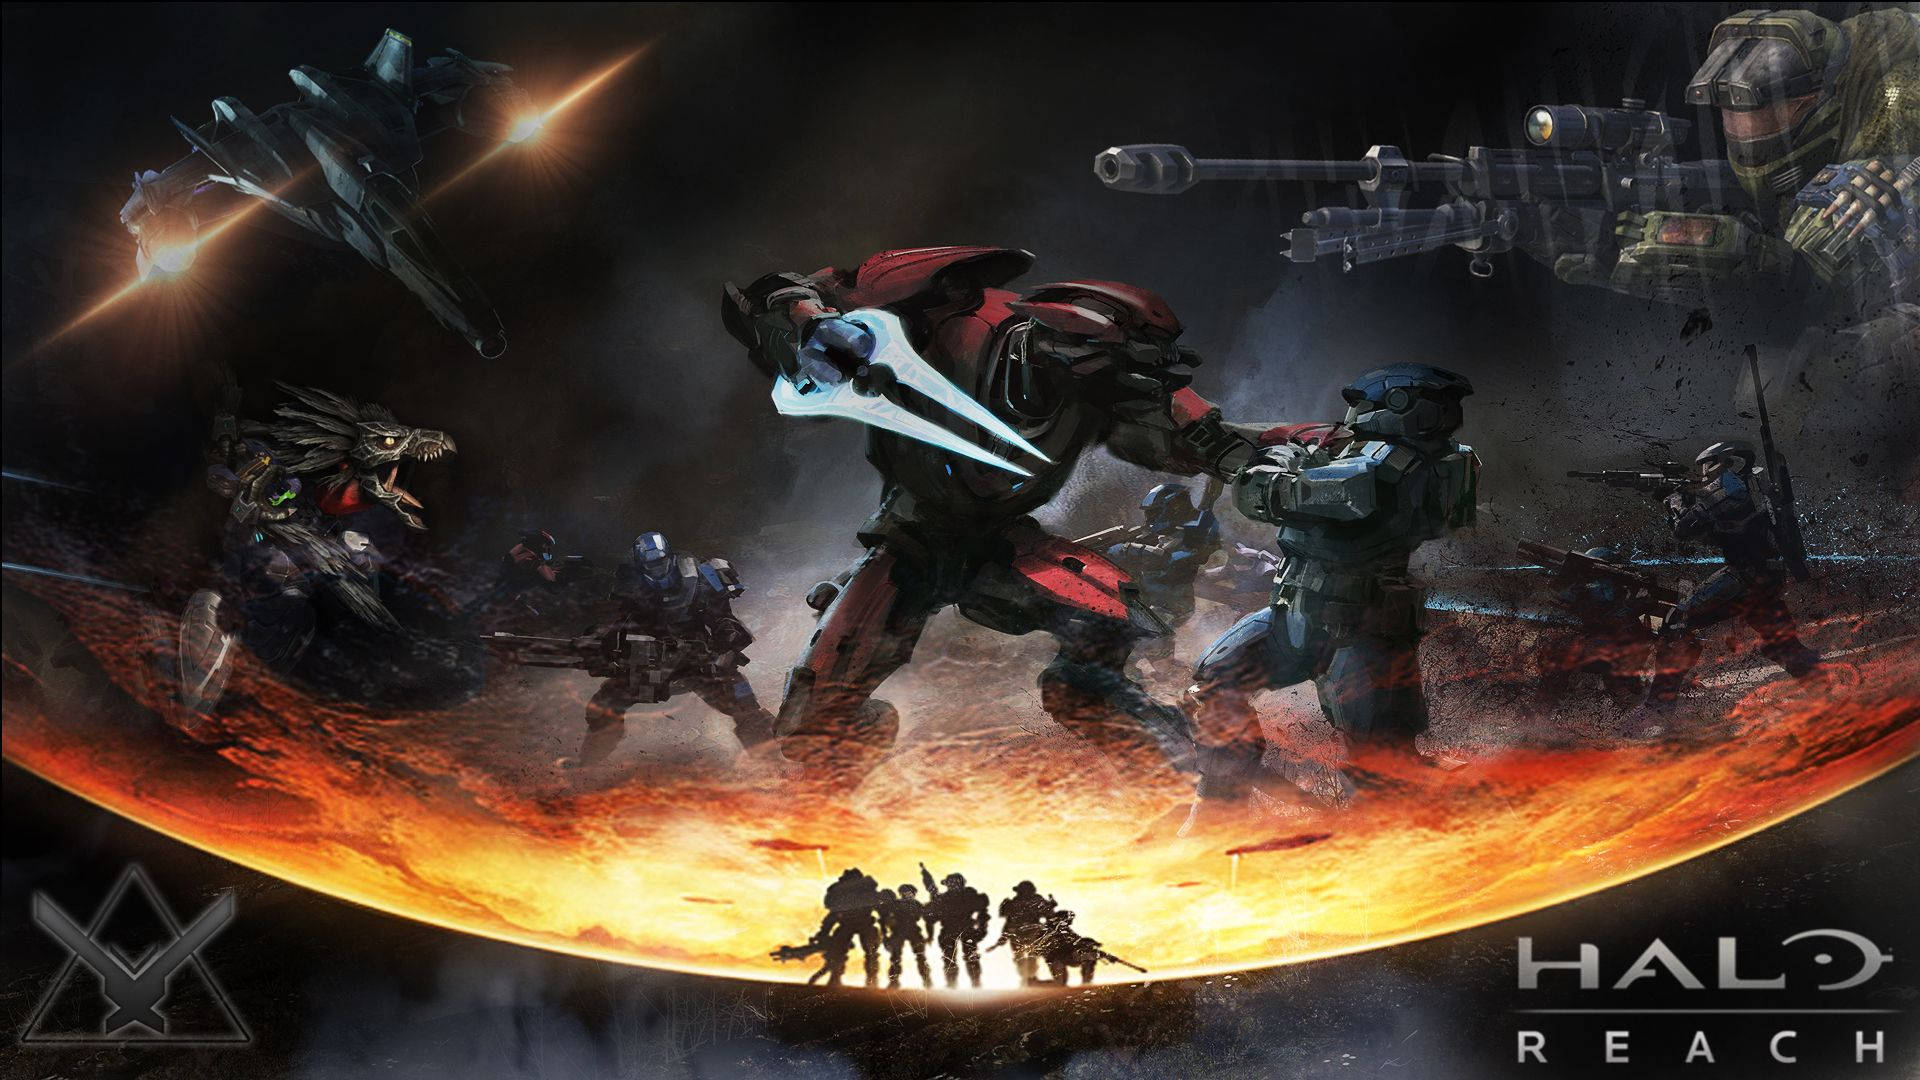 A daring battle awaits in Halo Reach Wallpaper